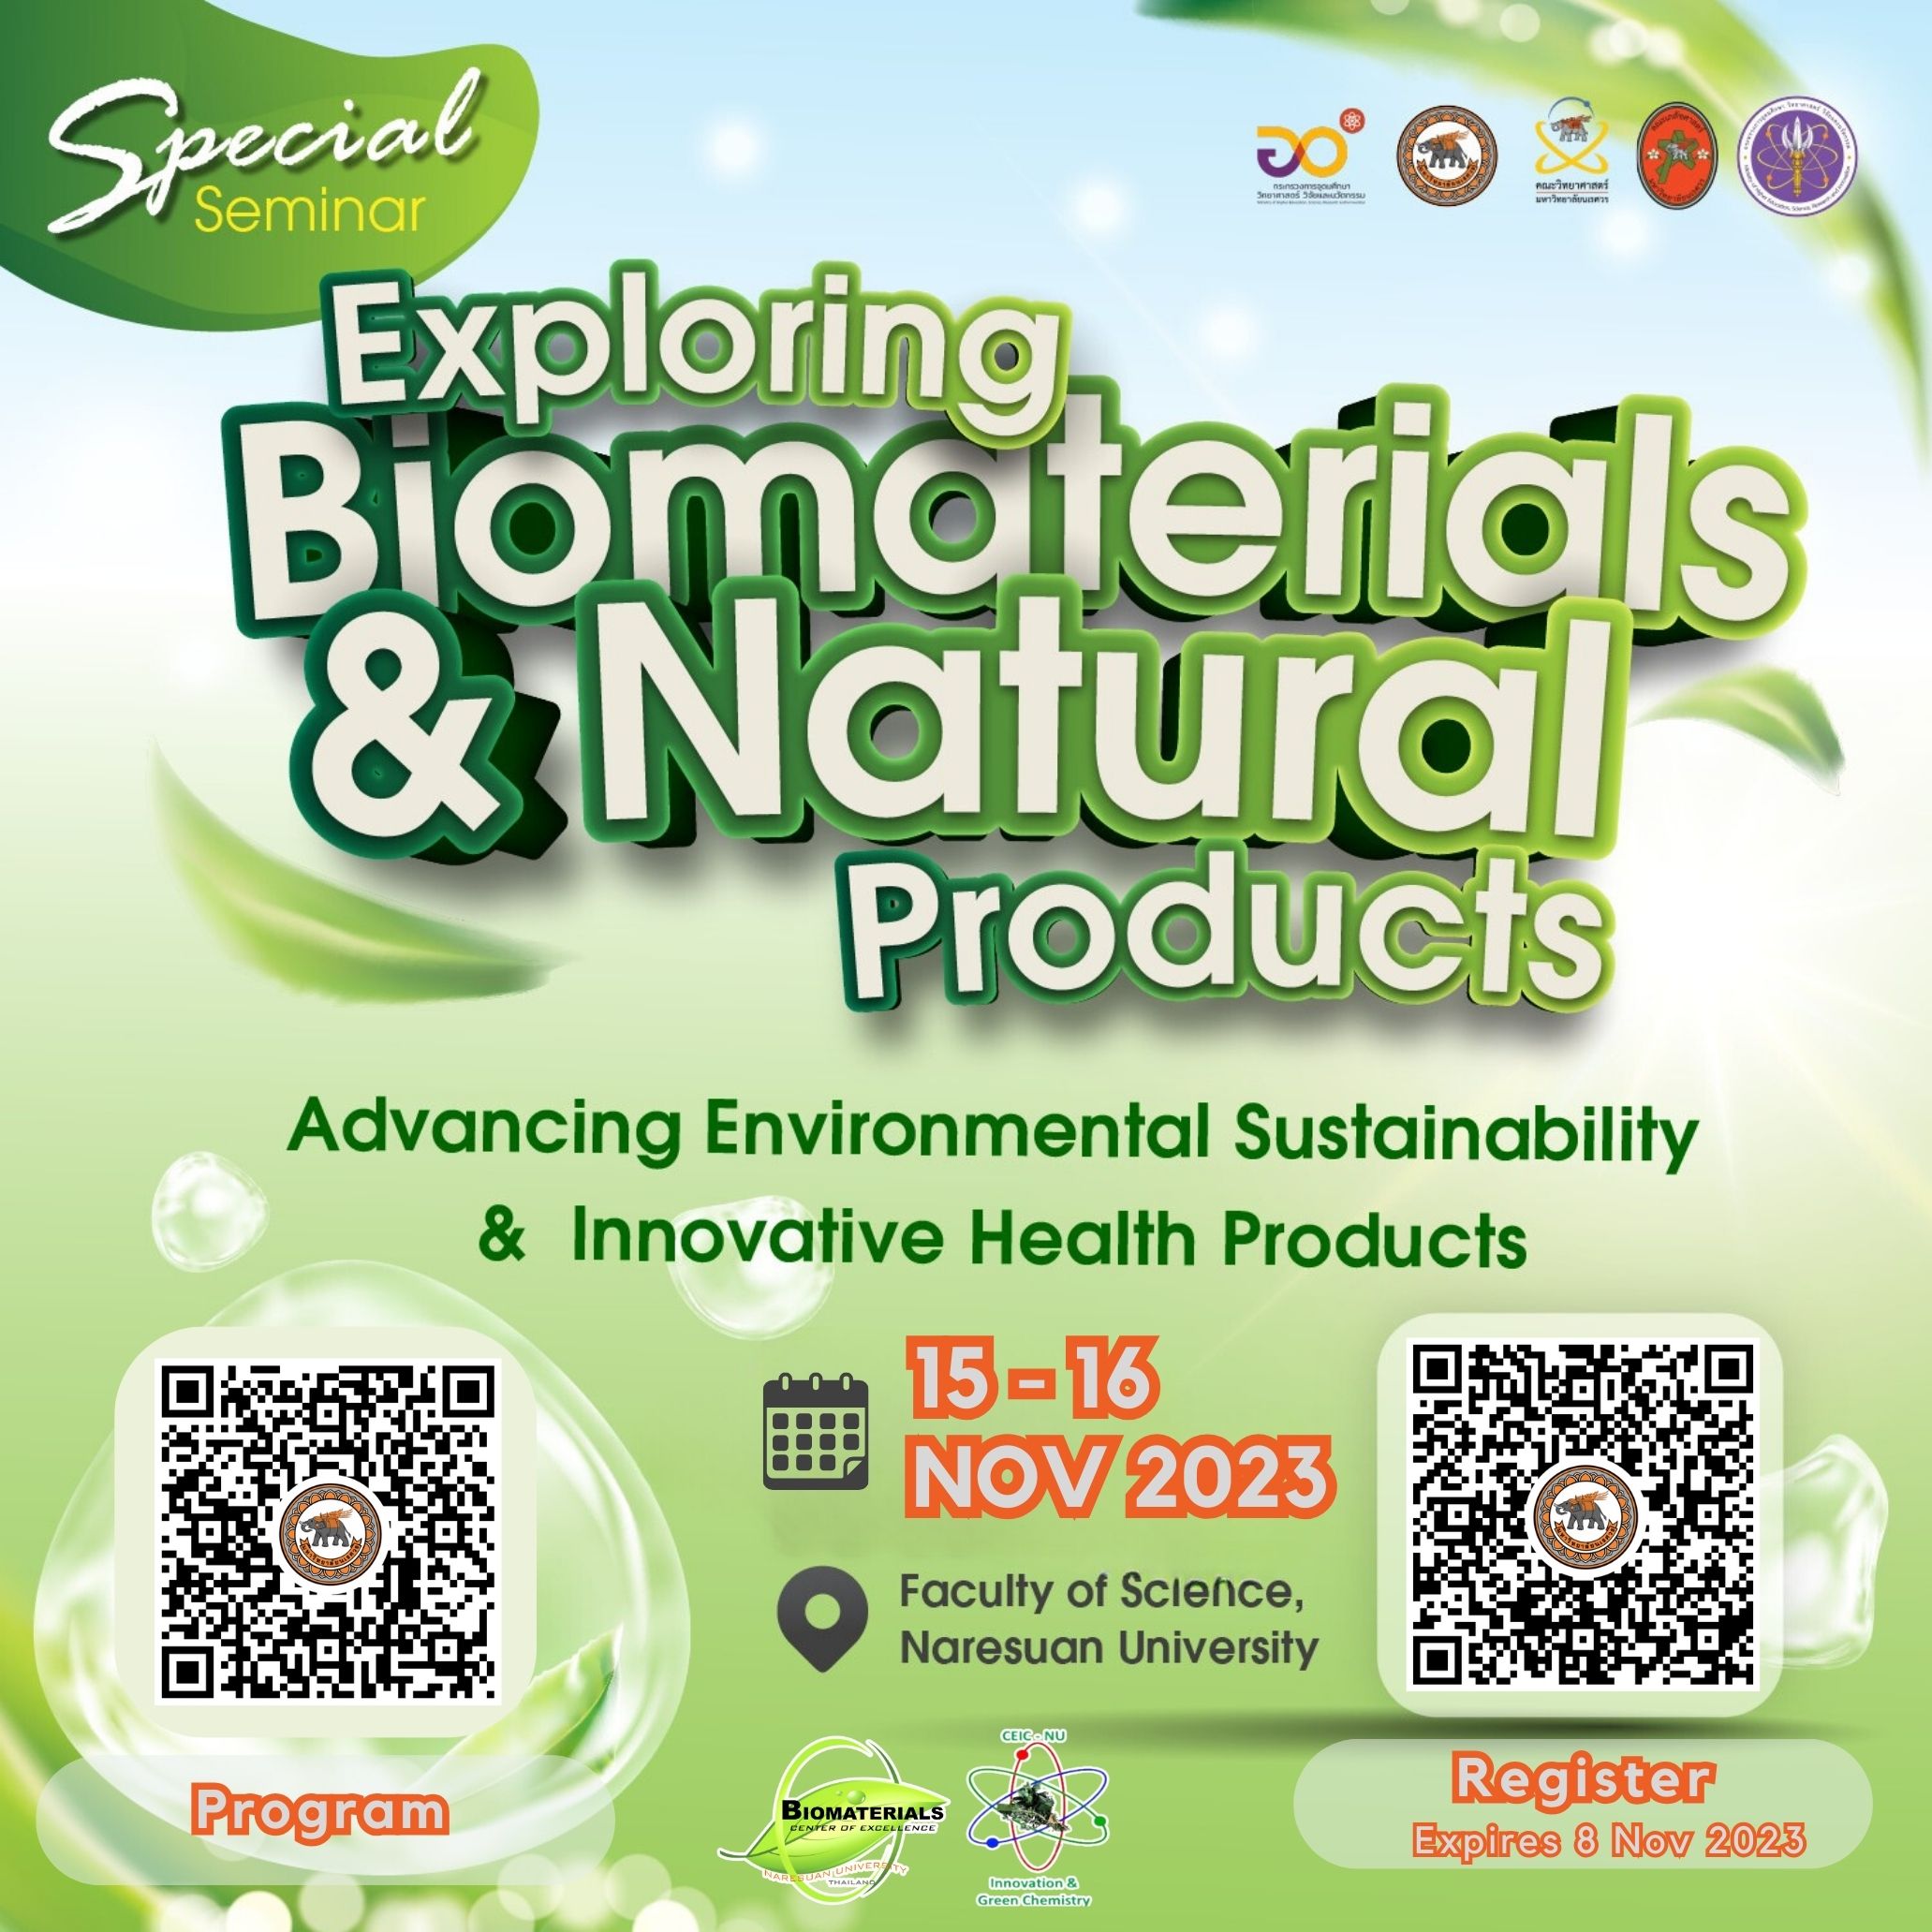 Exploring Biomaterials & Natural Products: Advancing Environmental Sustainability & Innovative Health Products